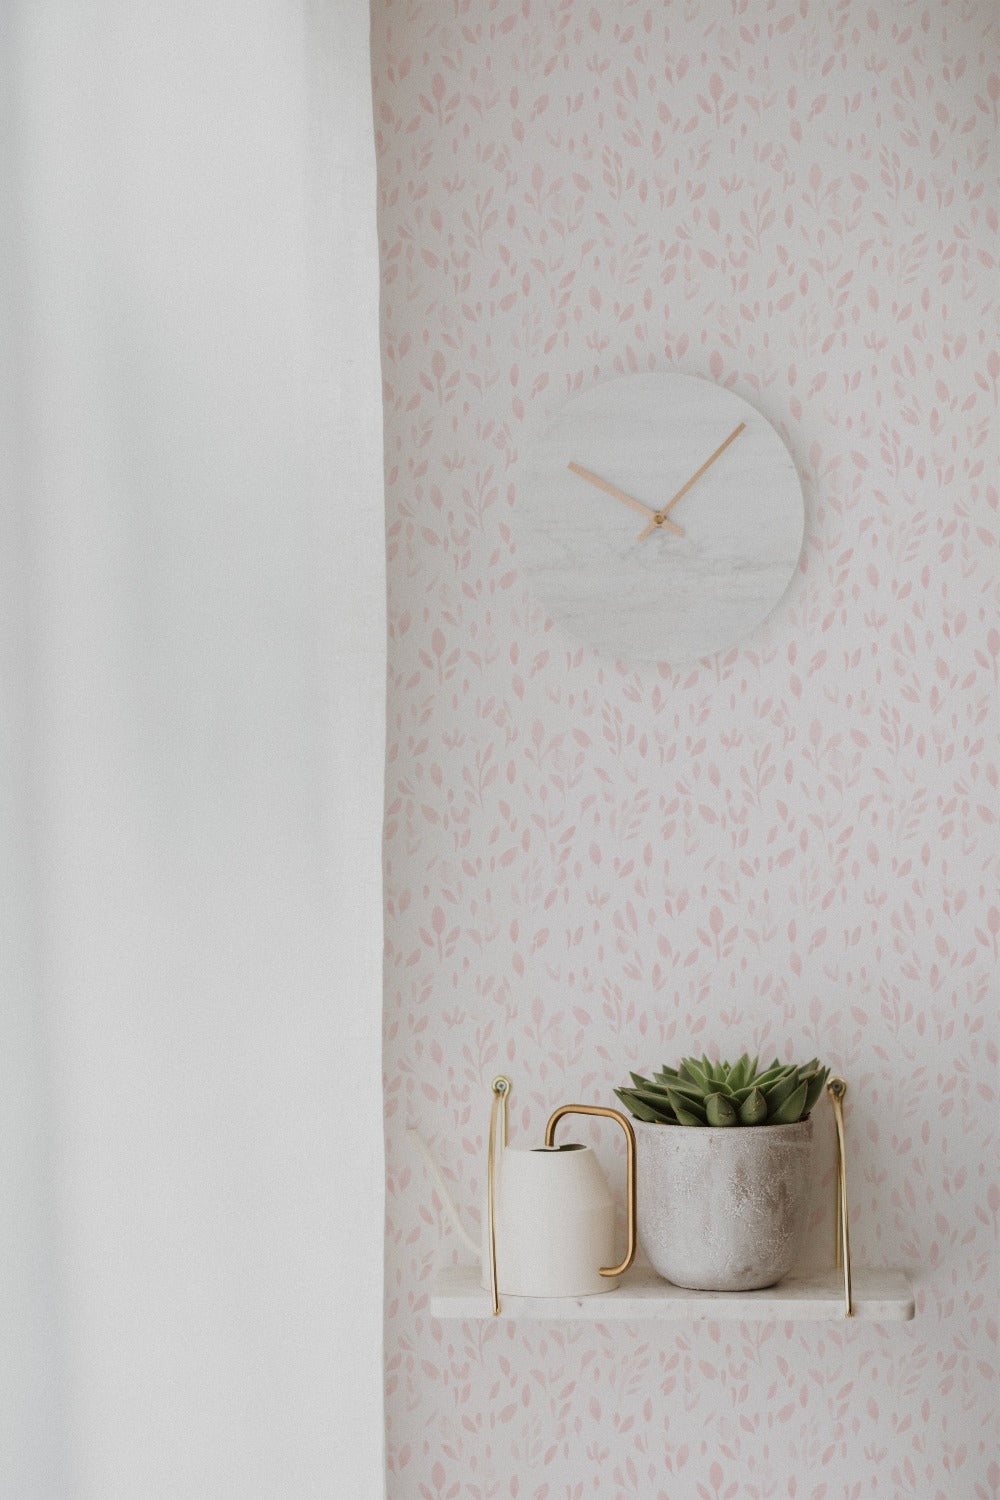 wallpaper, peel and stick wallpaper, Home decor, subtle botanica wallpaper, Floral wallpaper, bedroom wallpaper, blush wallpaper, pink wallpaper,